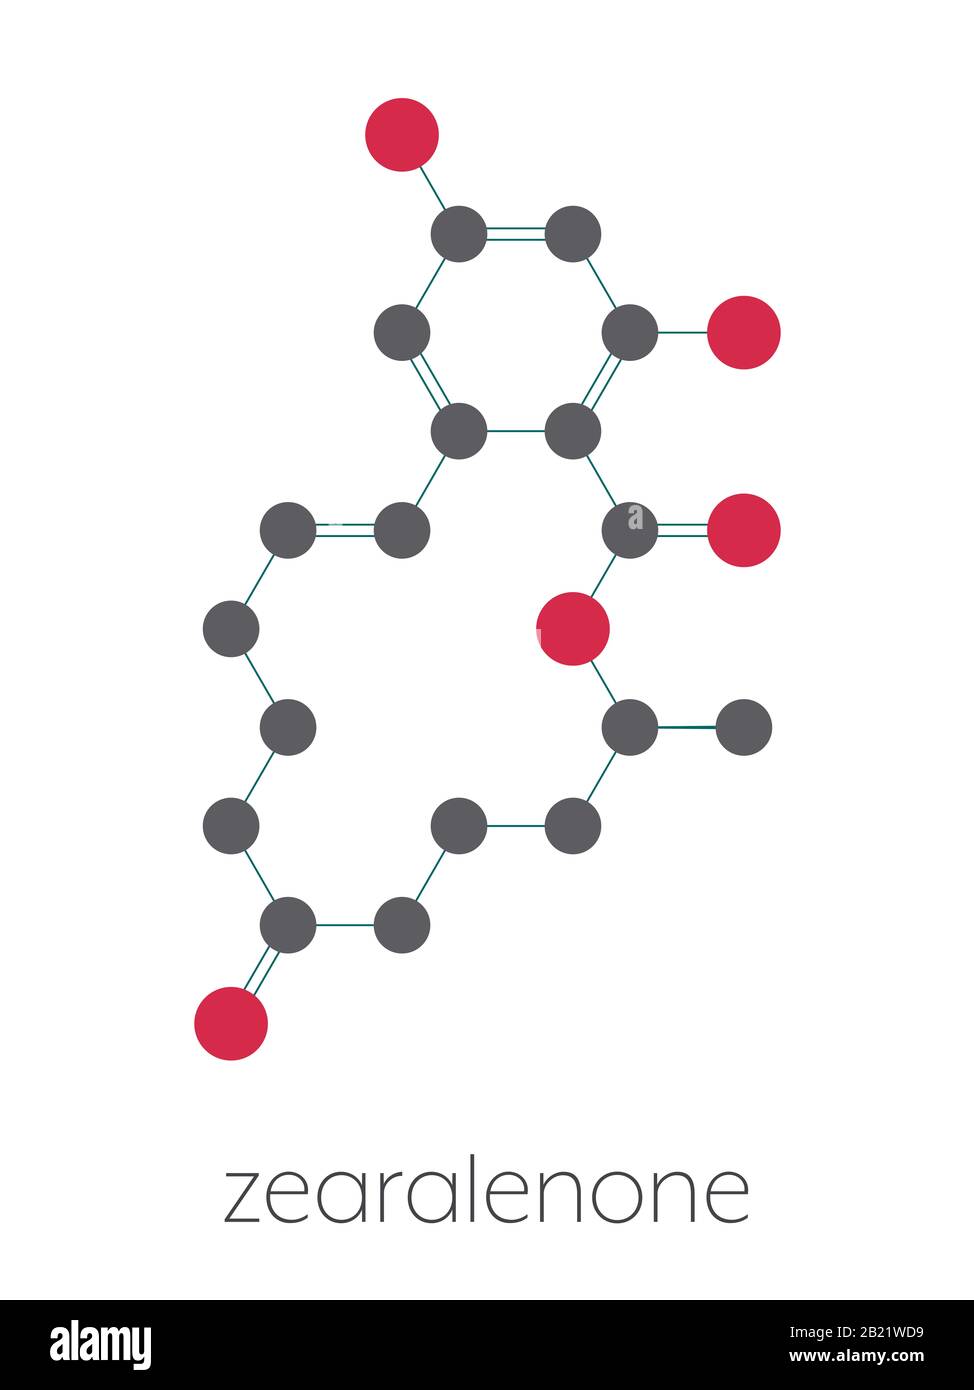 Zearalenone mycotoxin molecule, illustration Stock Photo